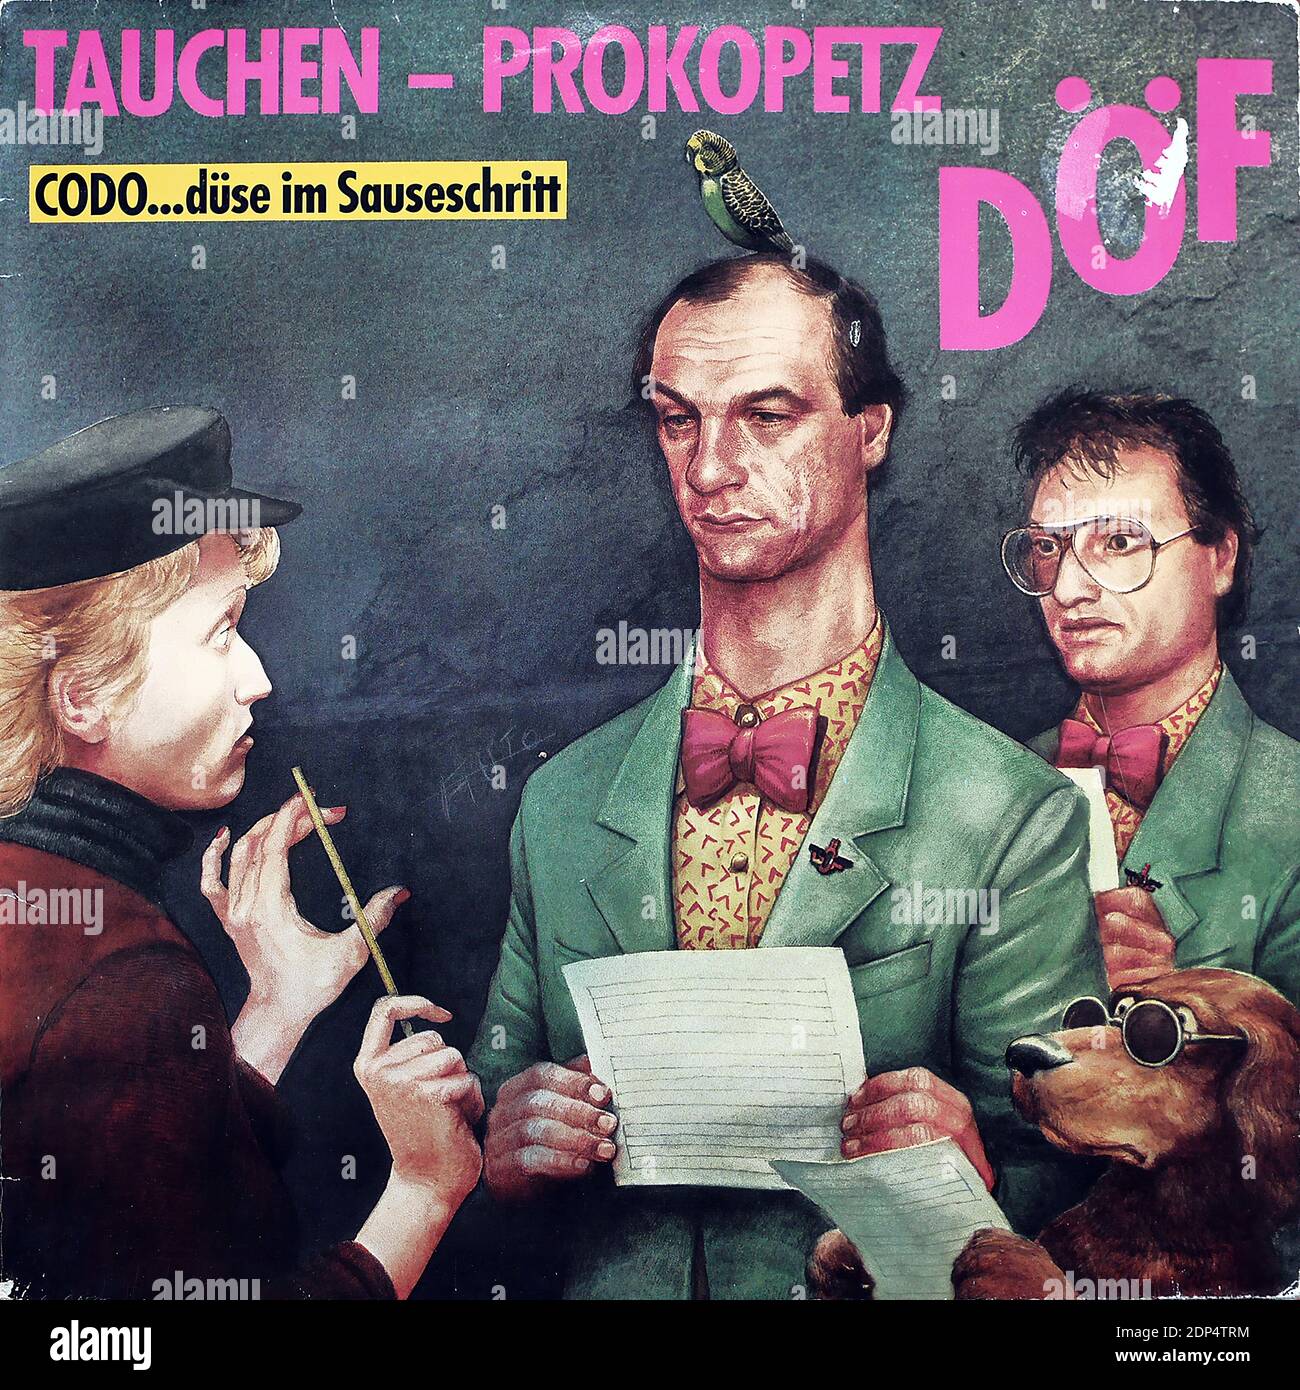 Tauchen - Prokopetz - DÖF,WEA 24-0187-1  - Vintage vinyl album cover Stock Photo